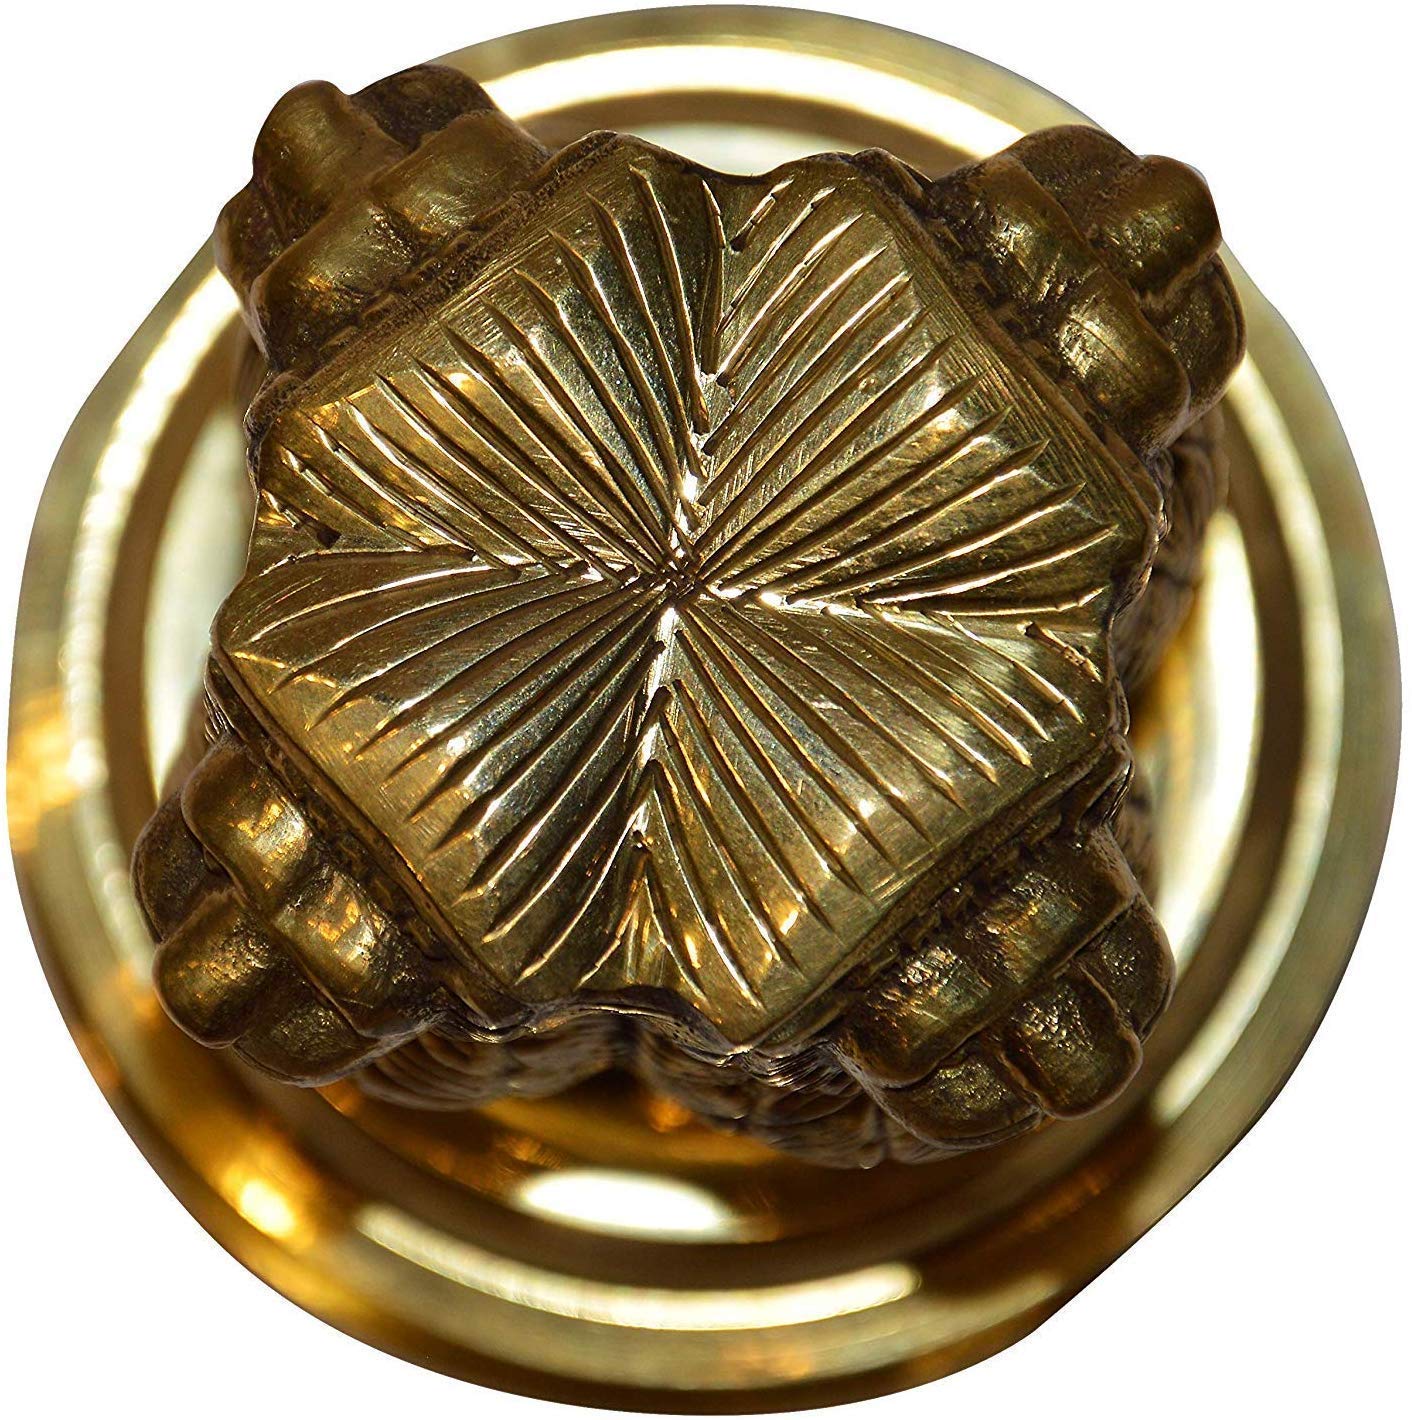 Ashok stambh ring | Mens gold jewelry, Gold jewelry, Gold ring designs